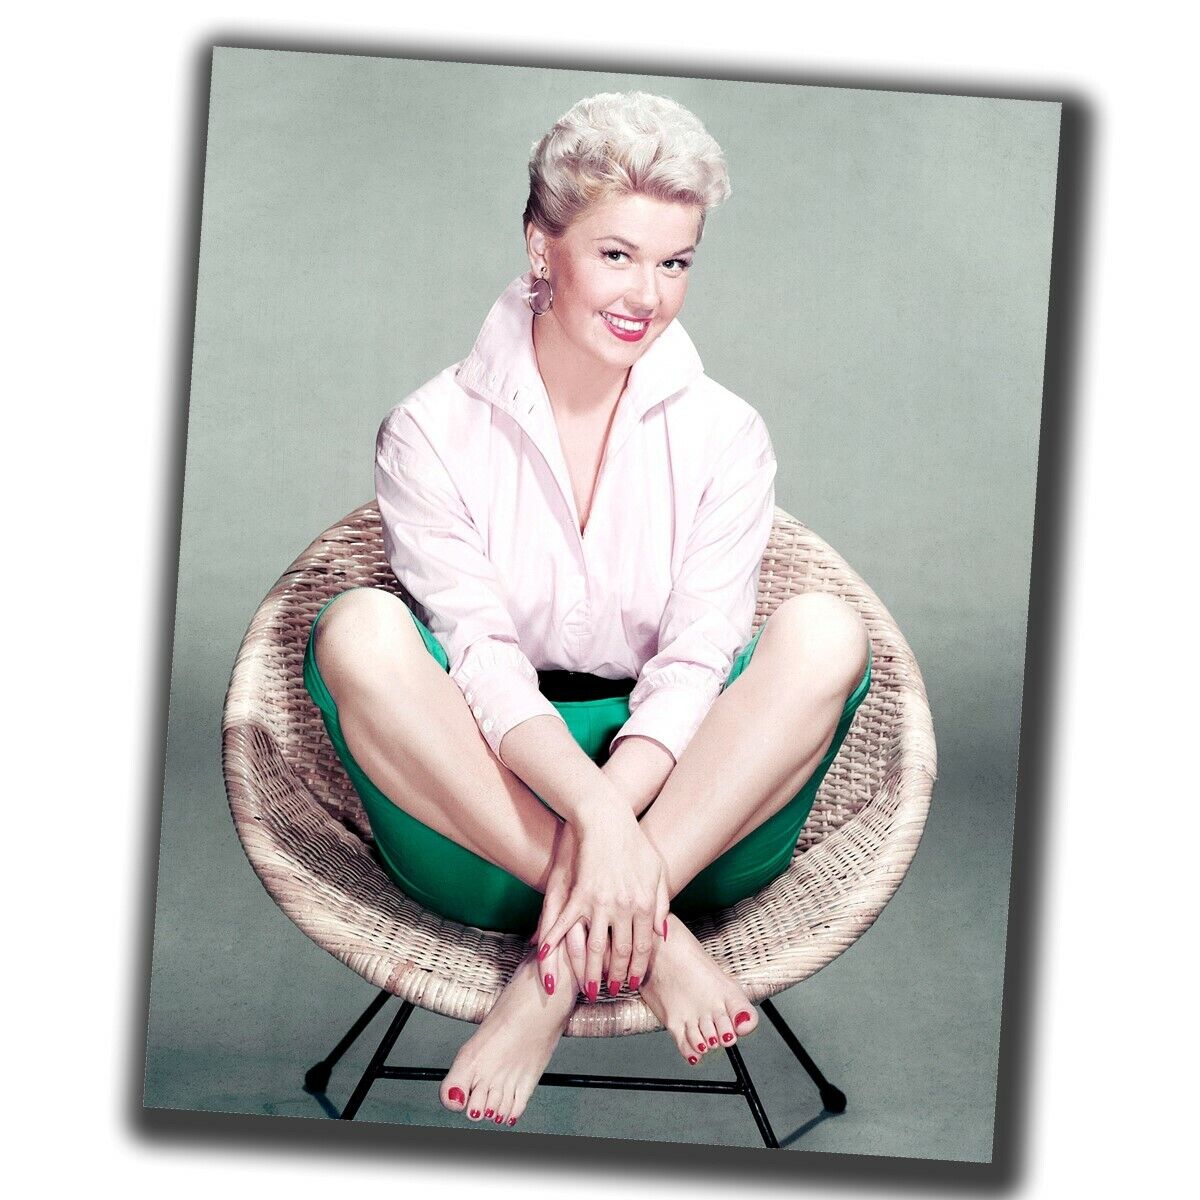 Doris Day FINE ART Celebrities Vintage Retro Photo Glossy Big Size 8X10in L021